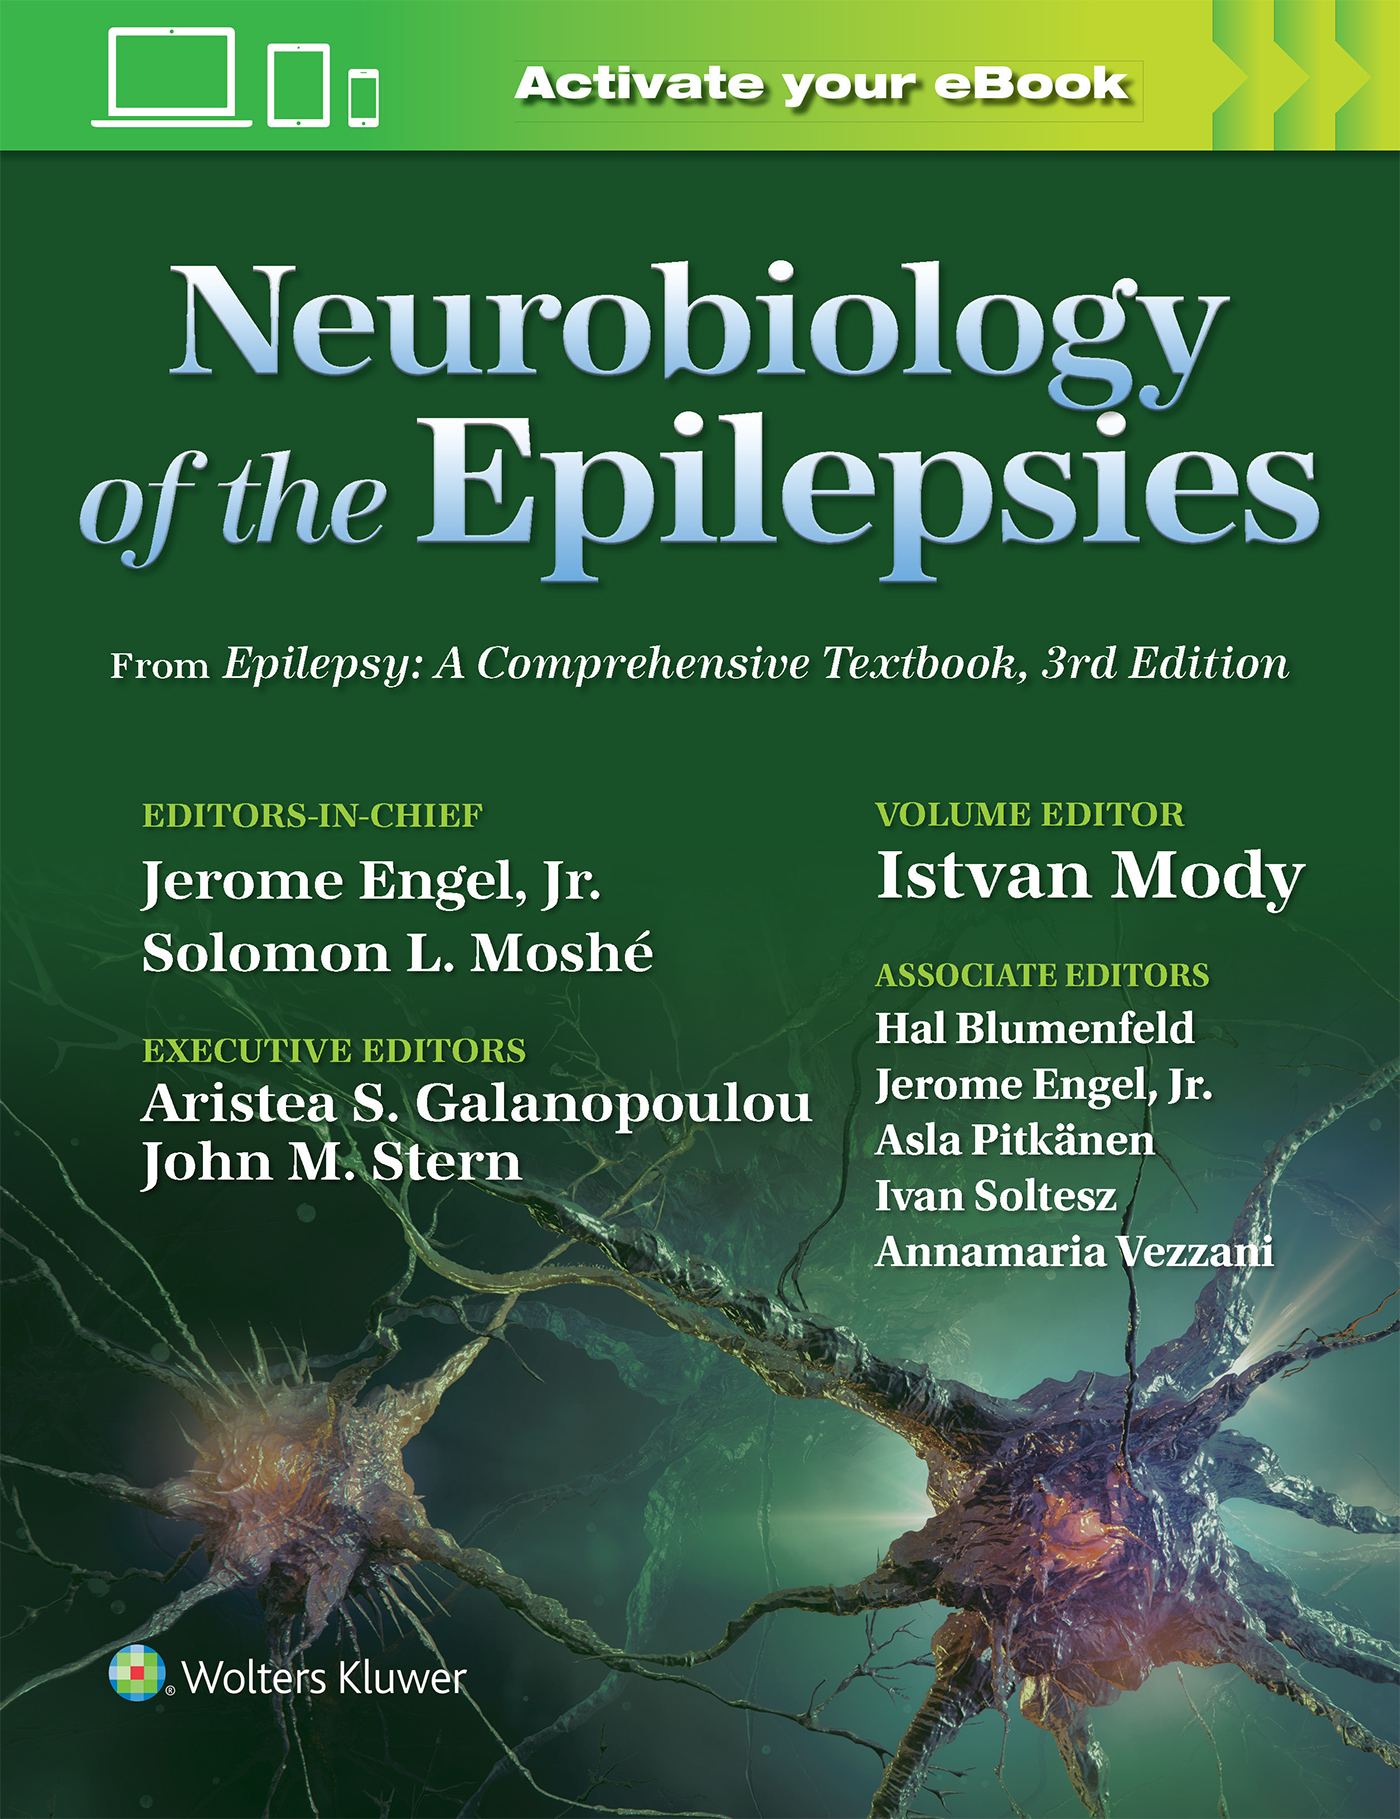 Neurobiology of the Epilepsies